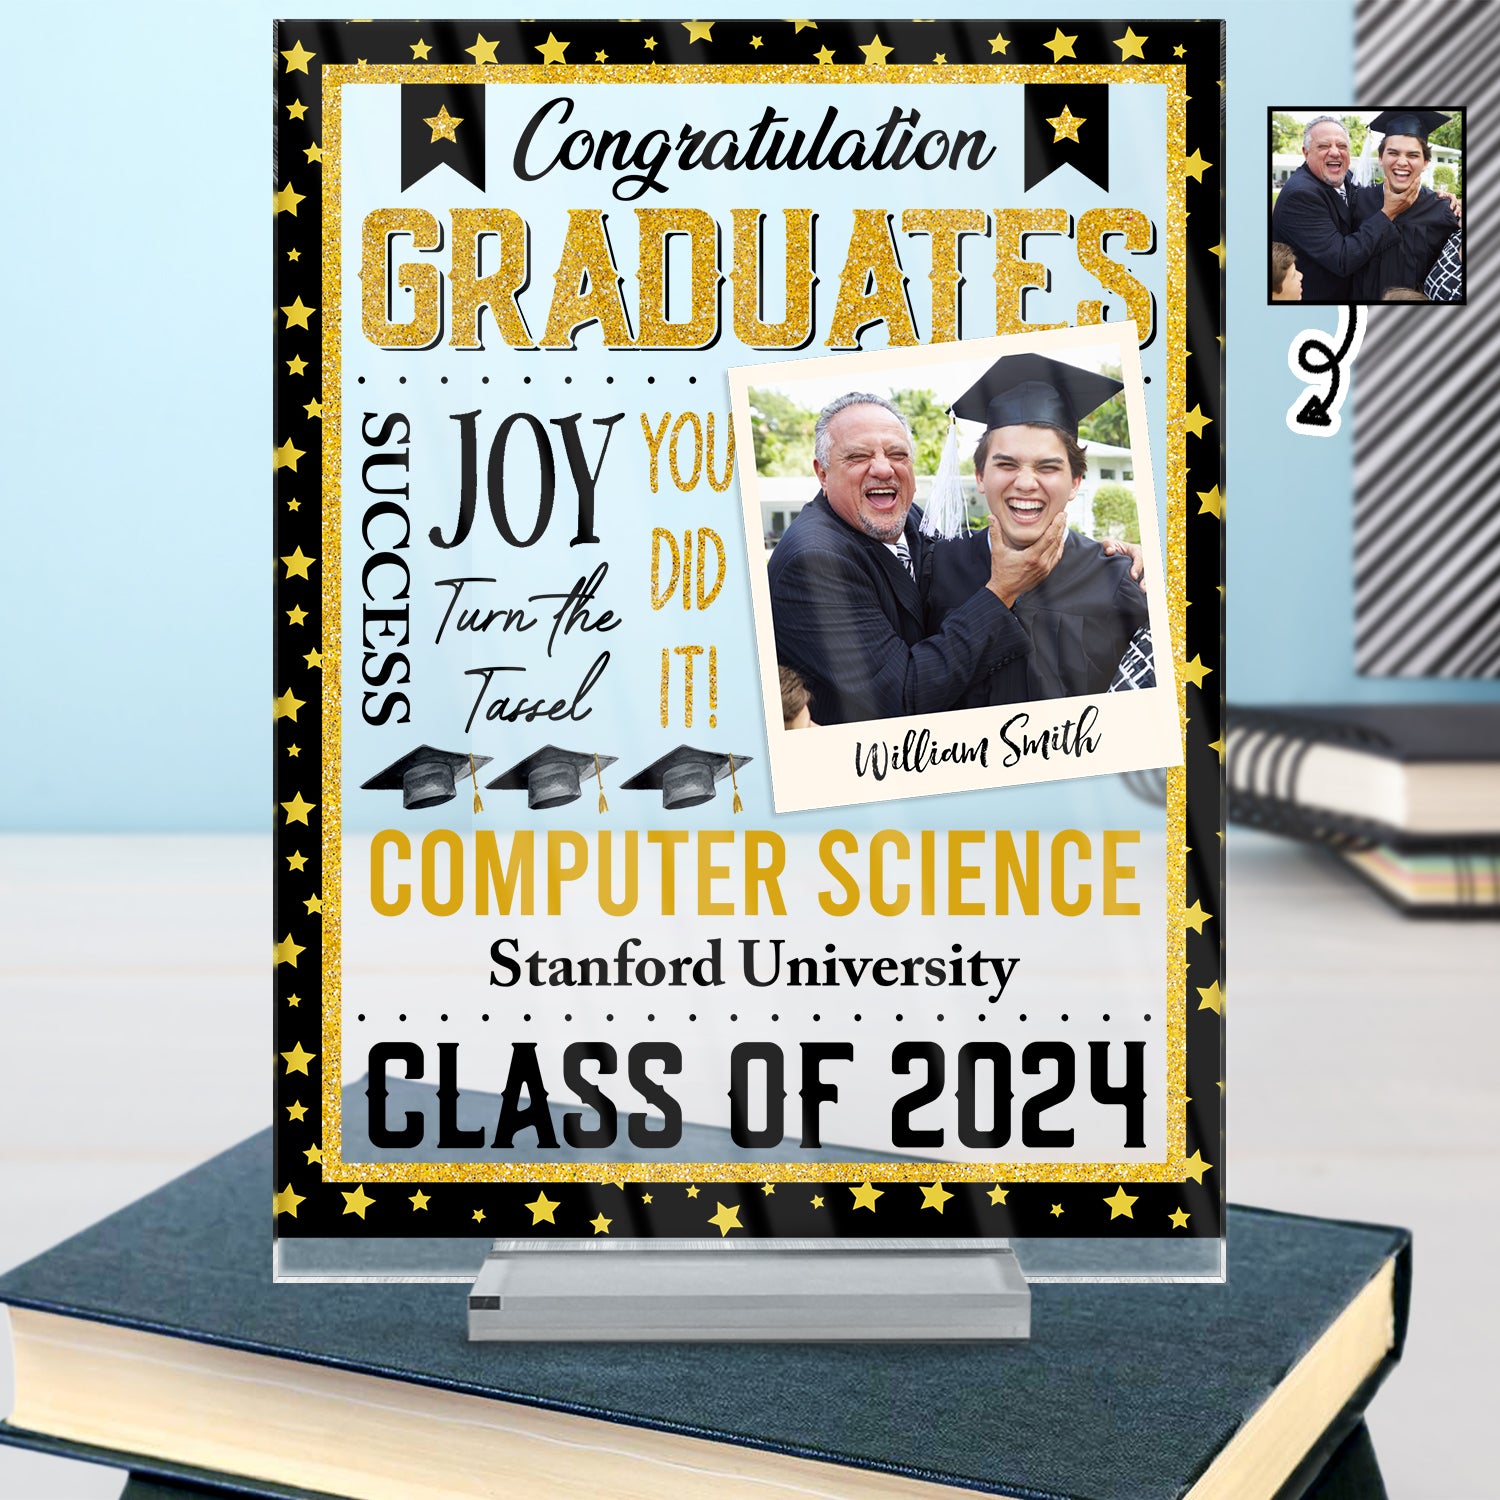 Custom Photo Congratulation Graduates - Graduation Gift - Personalized Vertical Rectangle Acrylic Plaque